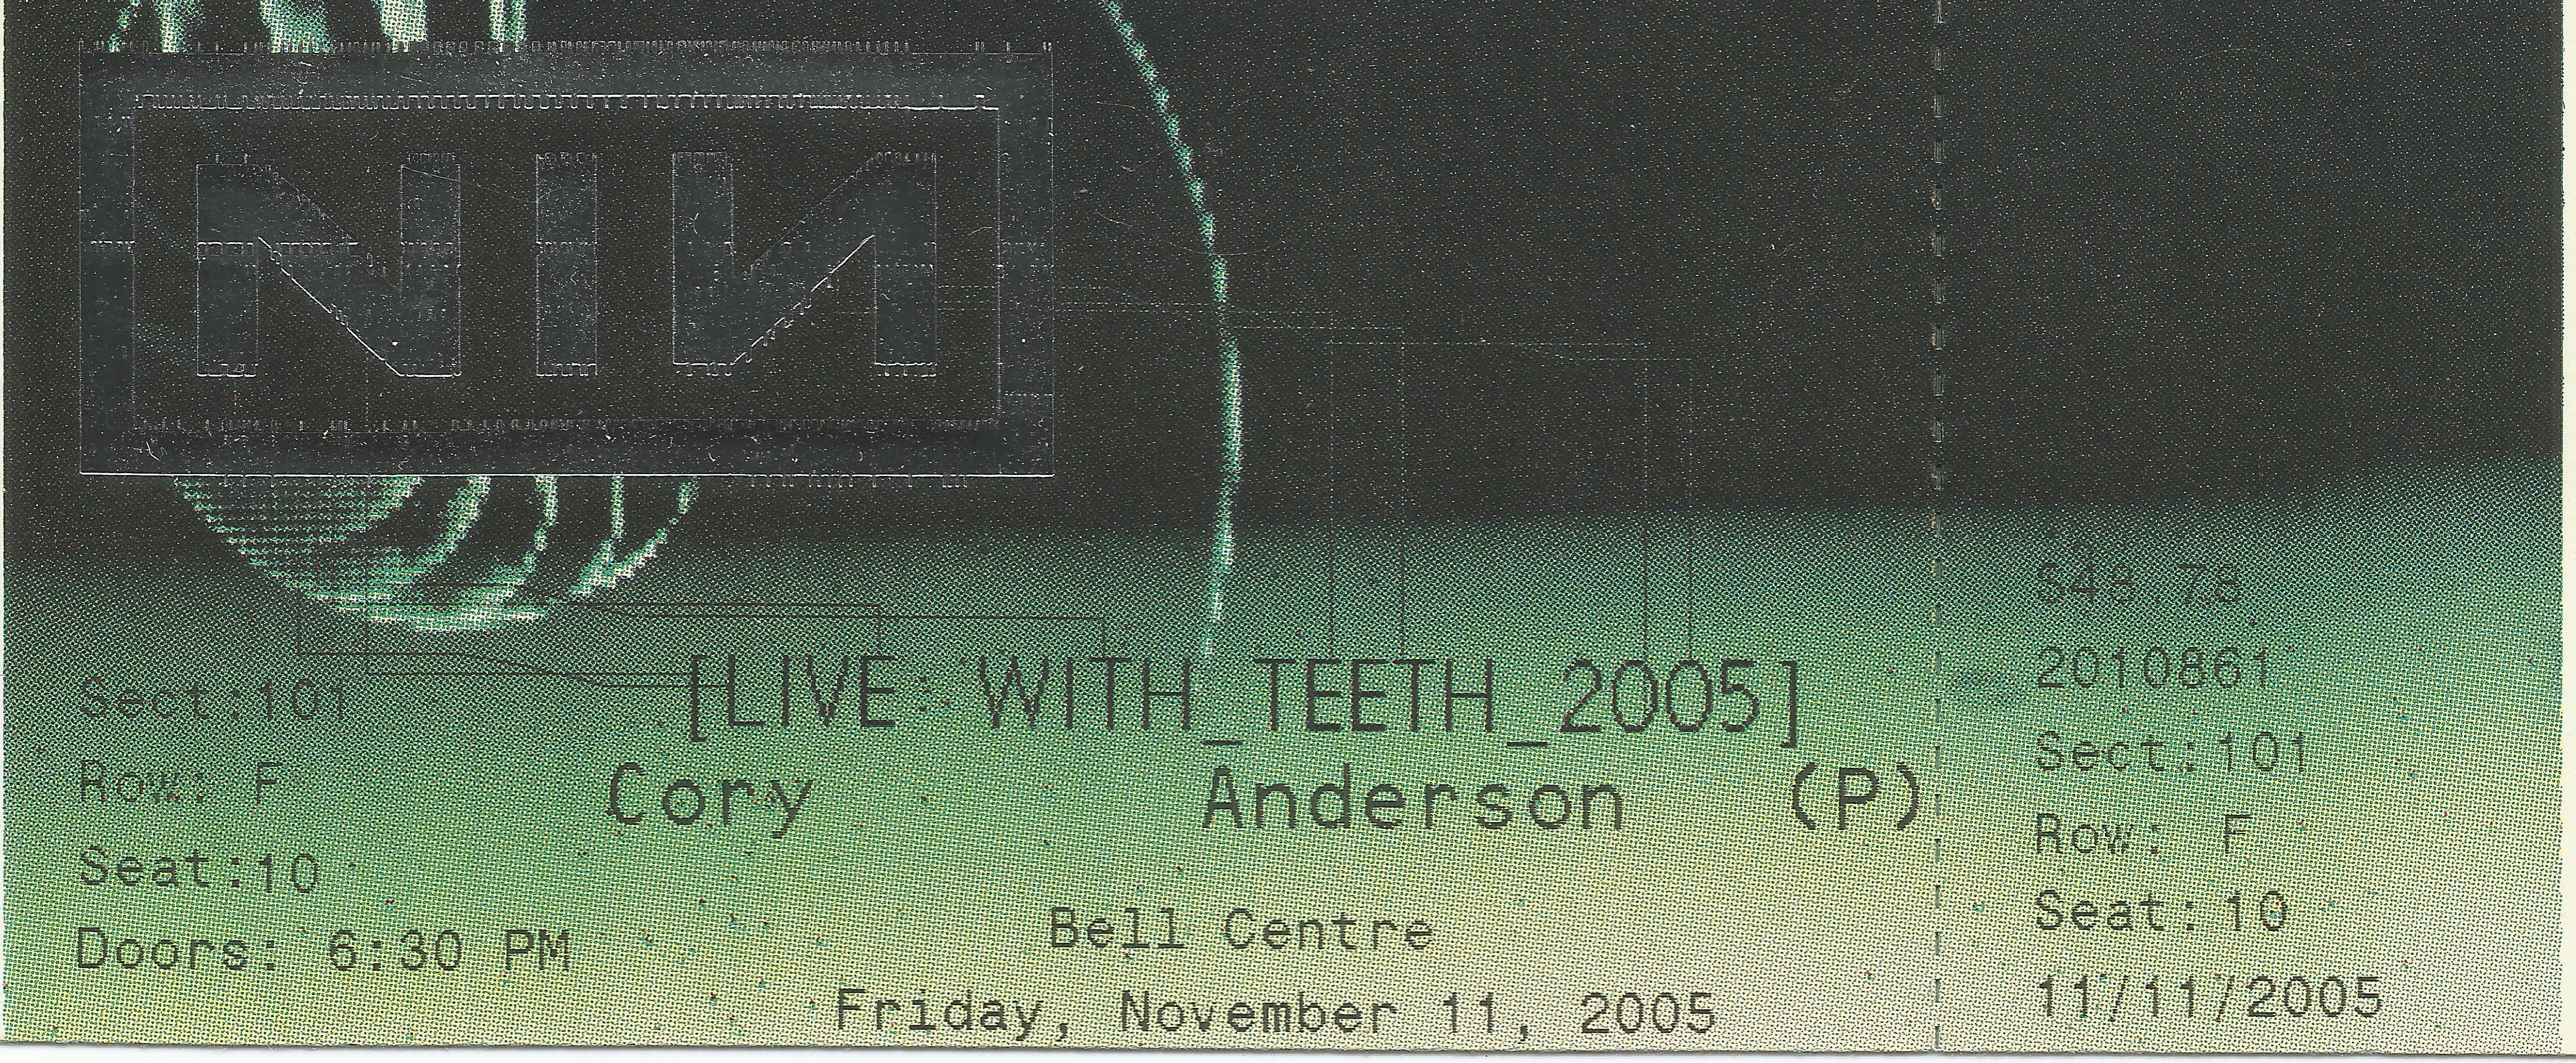 2005/11/11 Ticket